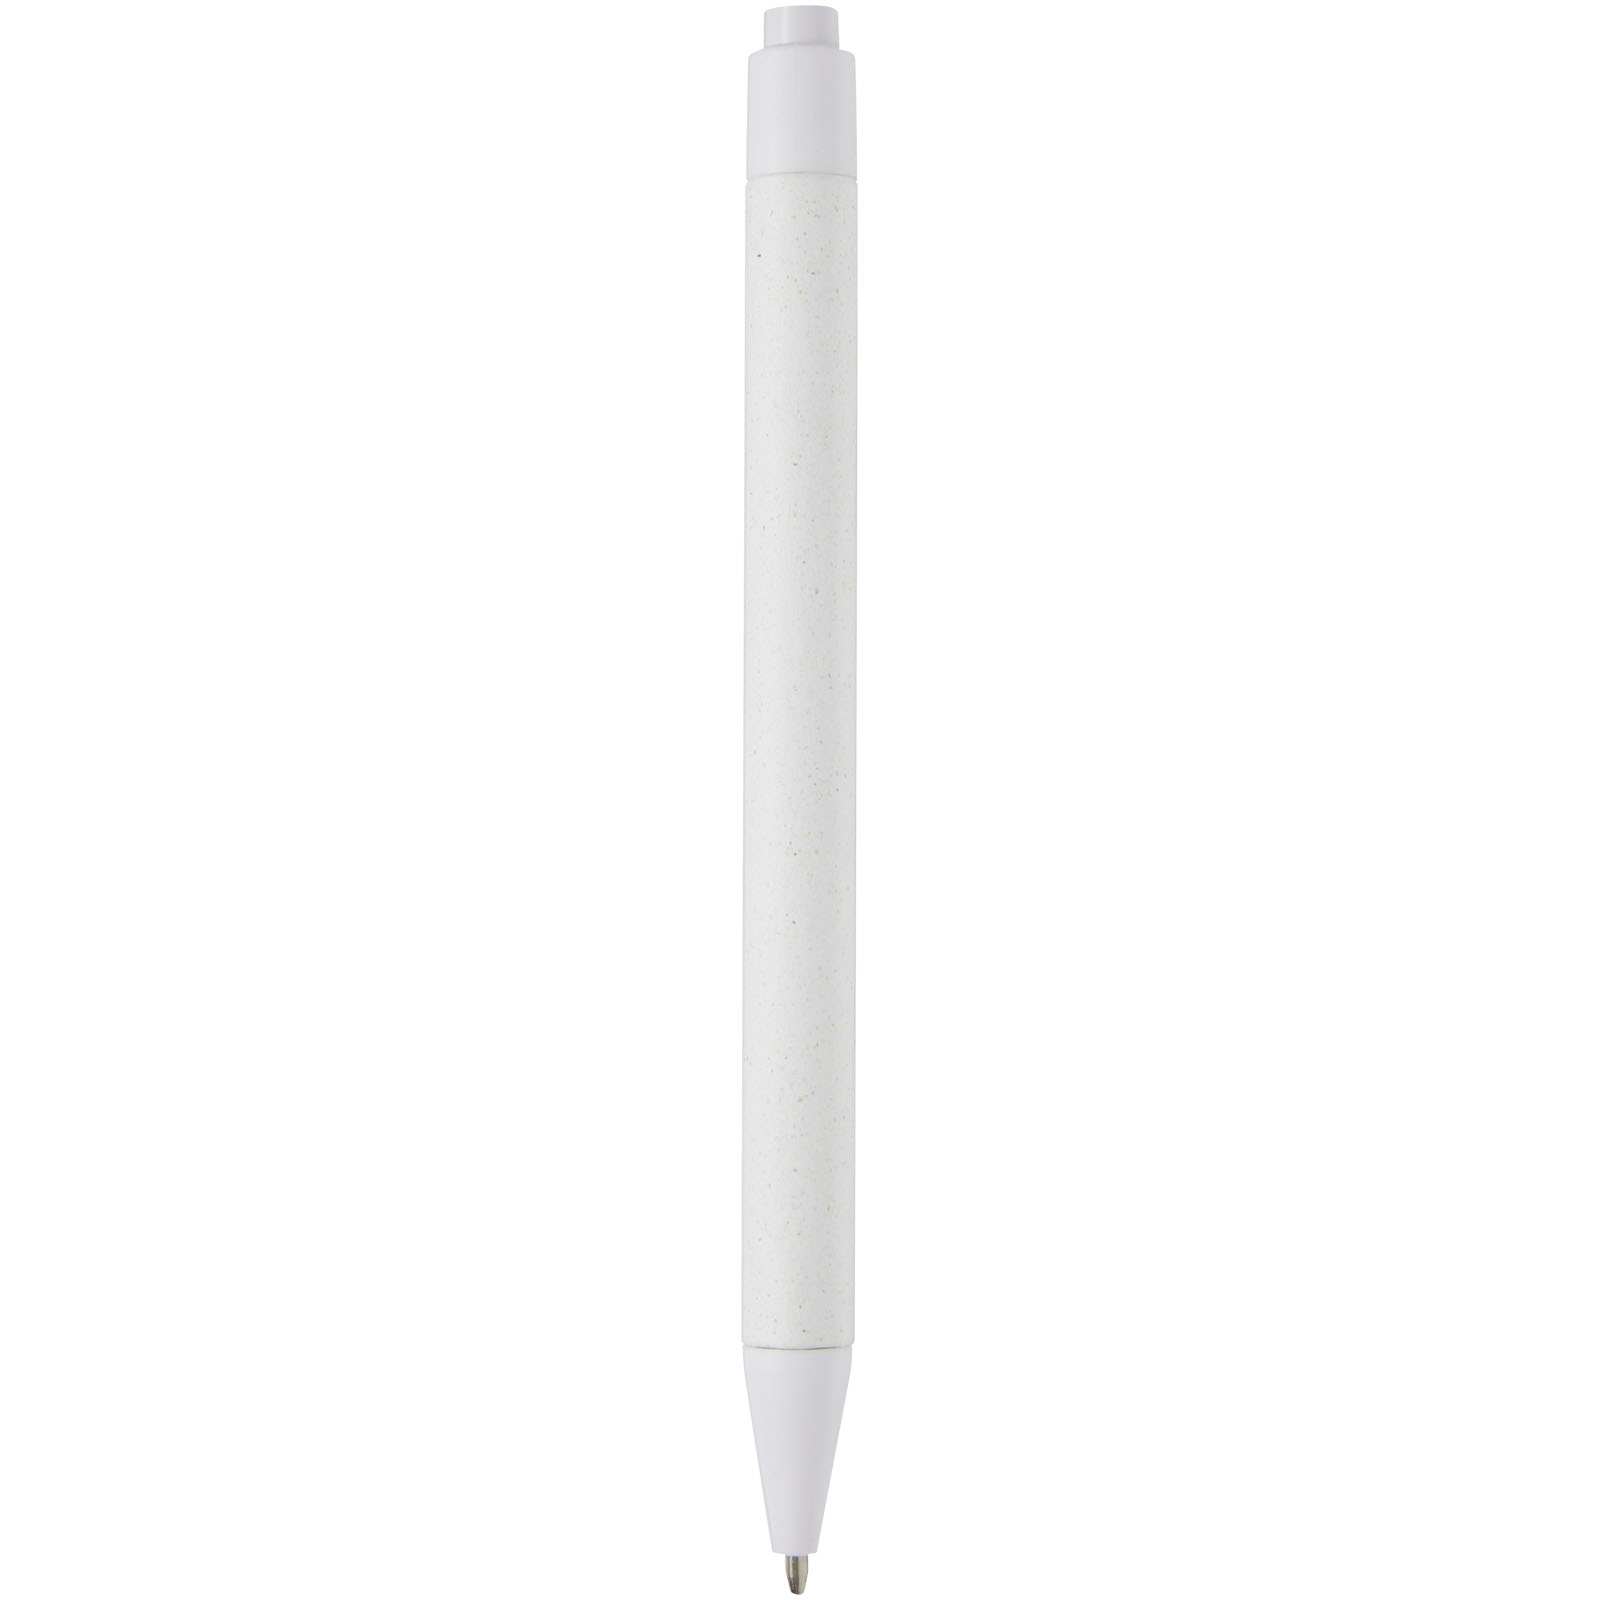 Advertising Ballpoint Pens - Fabianna crush paper ballpoint pen - 1